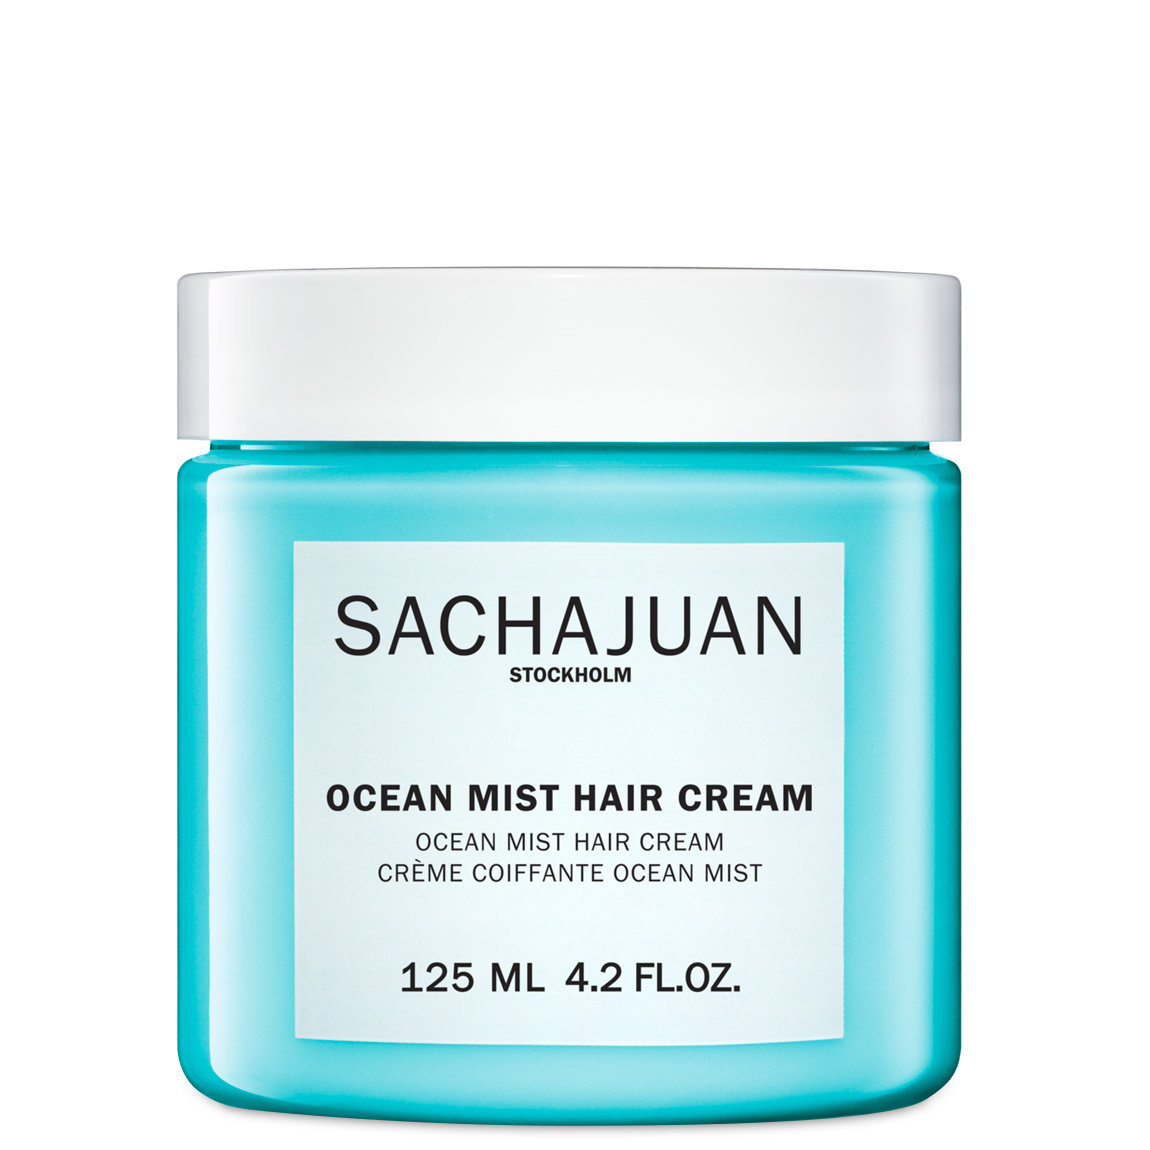 SACHAJUAN Ocean Mist Hair Cream alternative view 1 - product swatch.